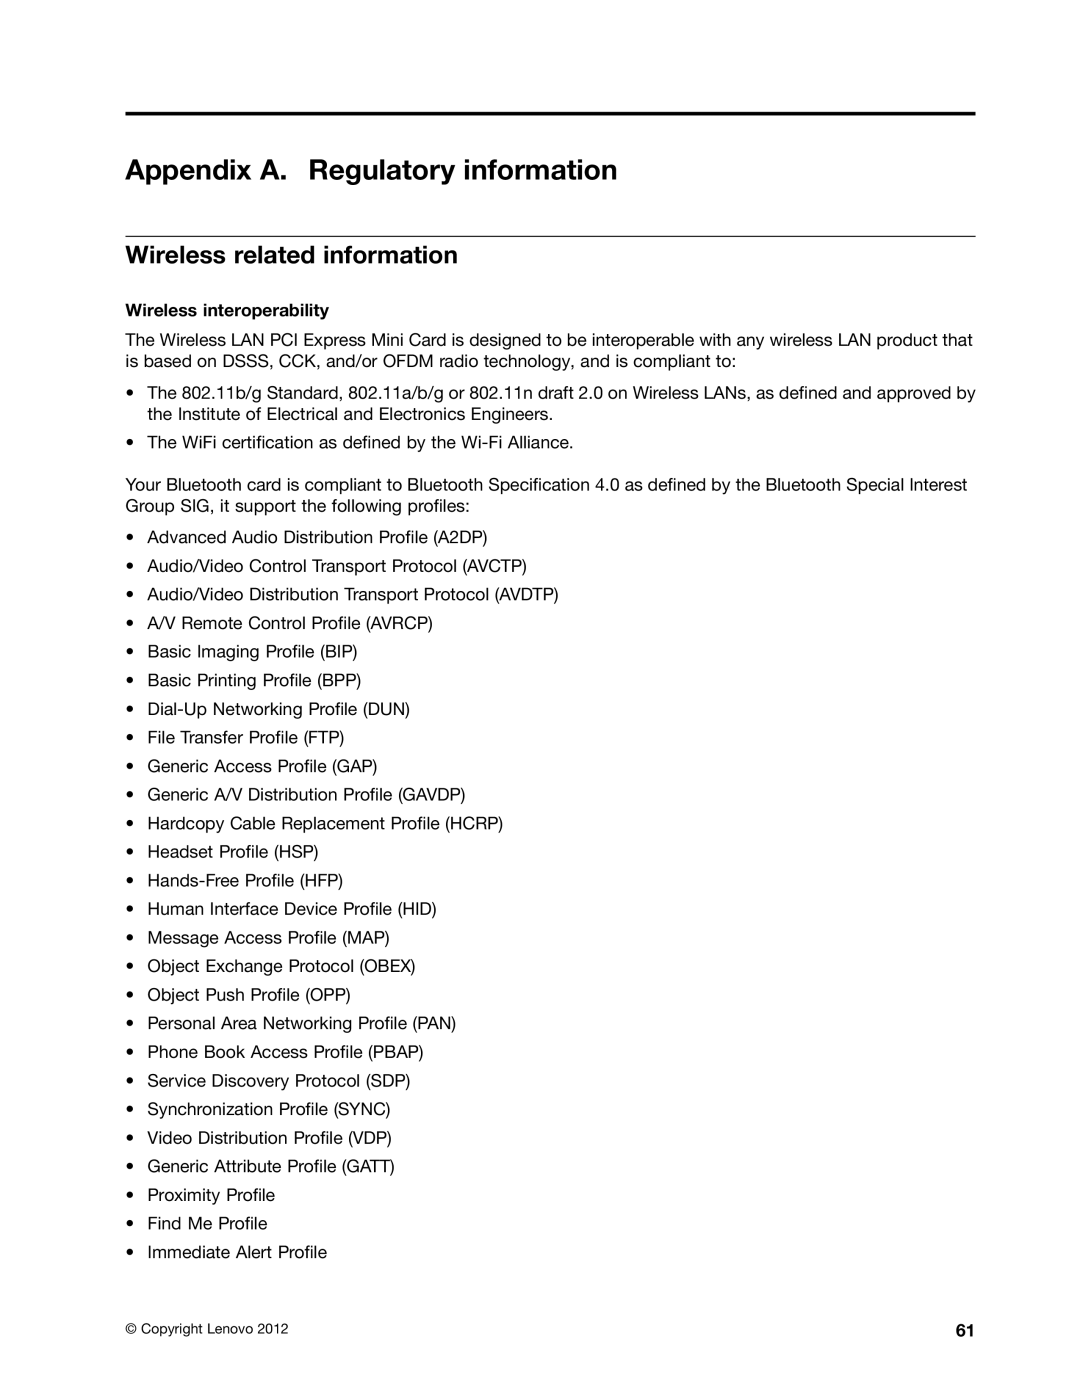 Lenovo B485 manual Appendix A. Regulatory information, Wireless related information, Wireless interoperability 